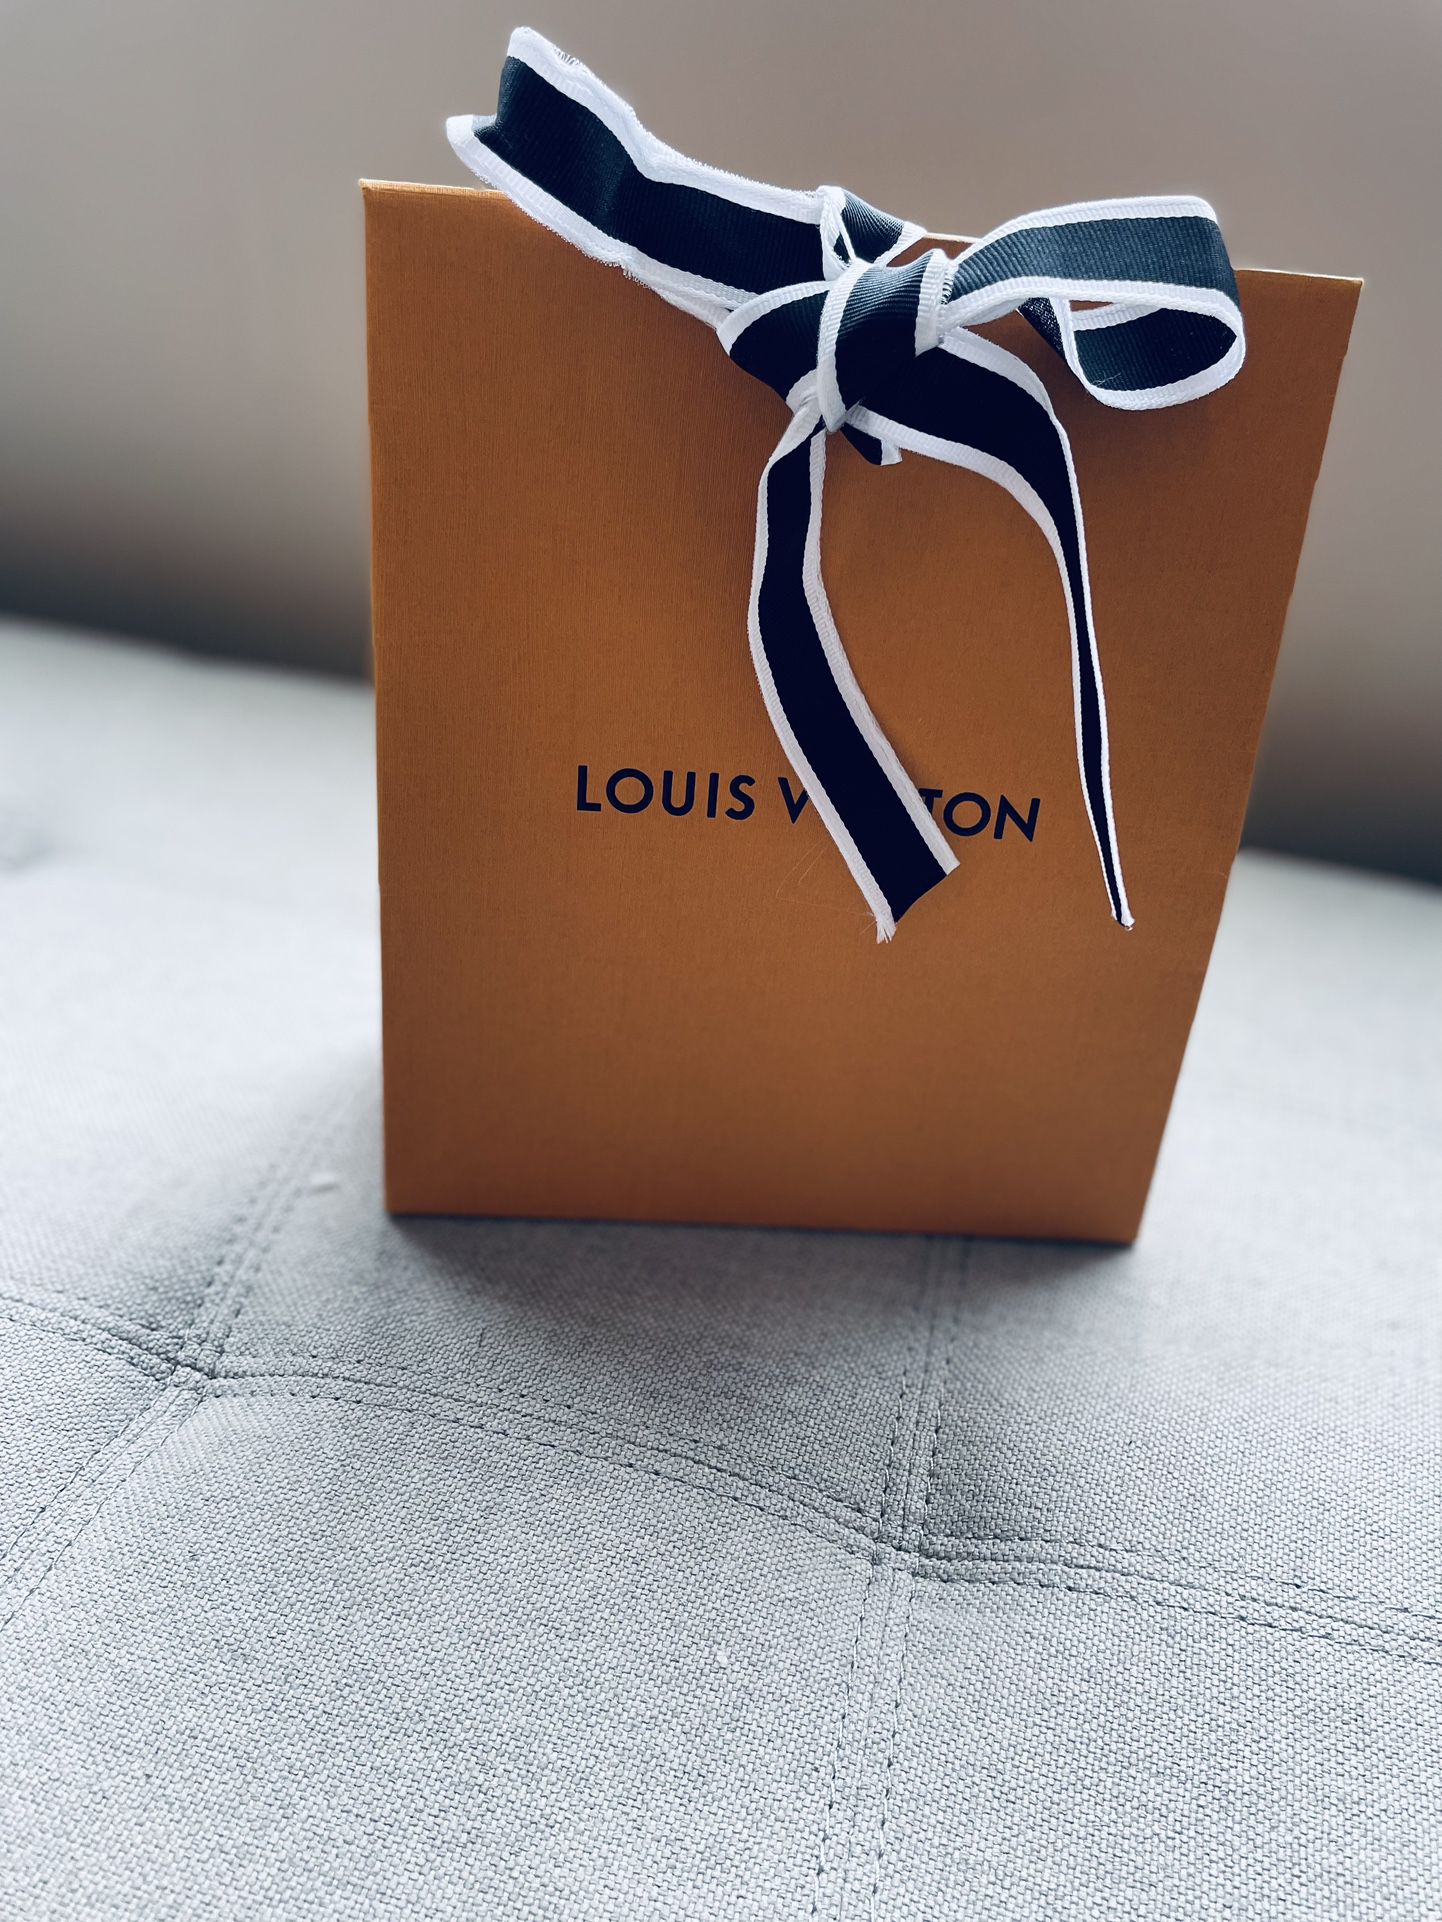 Louis Vuitton Gift Bags